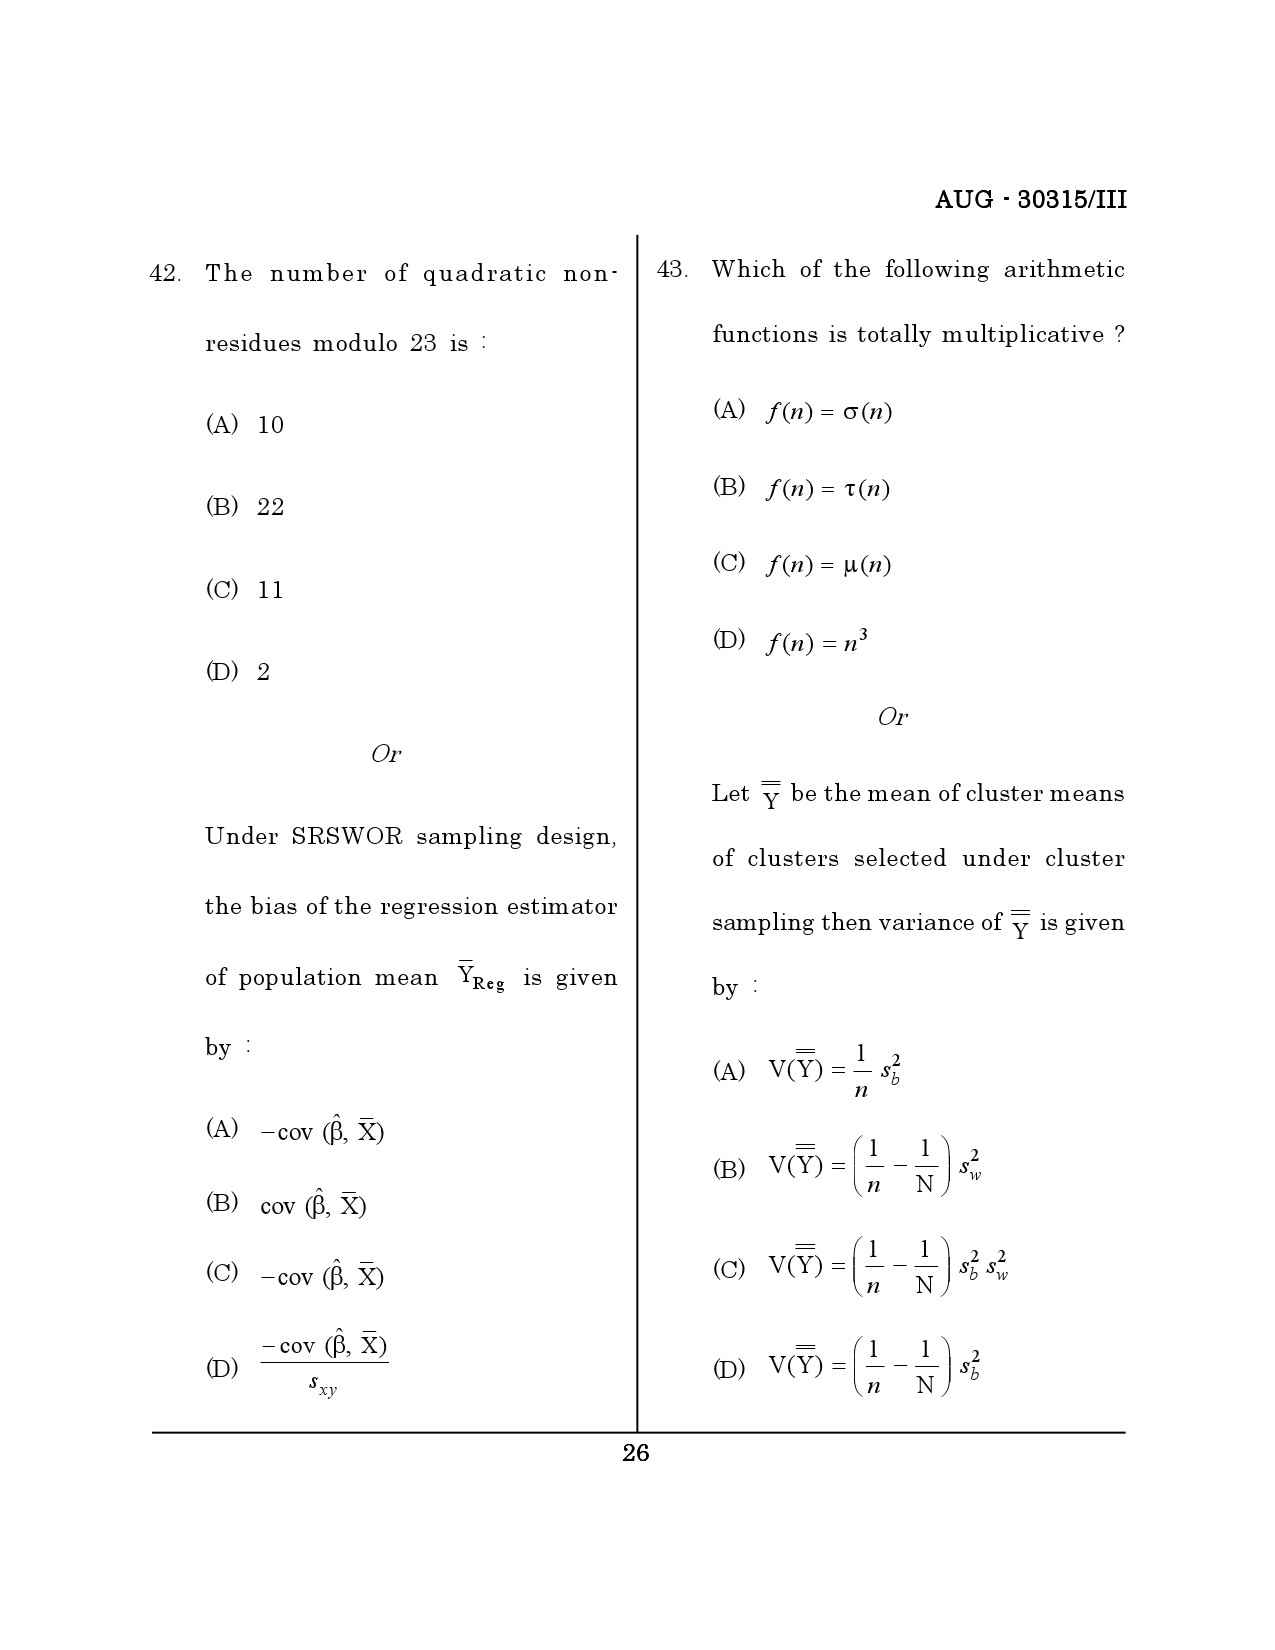 Maharashtra SET Mathematical Sciences Question Paper III August 2015 25